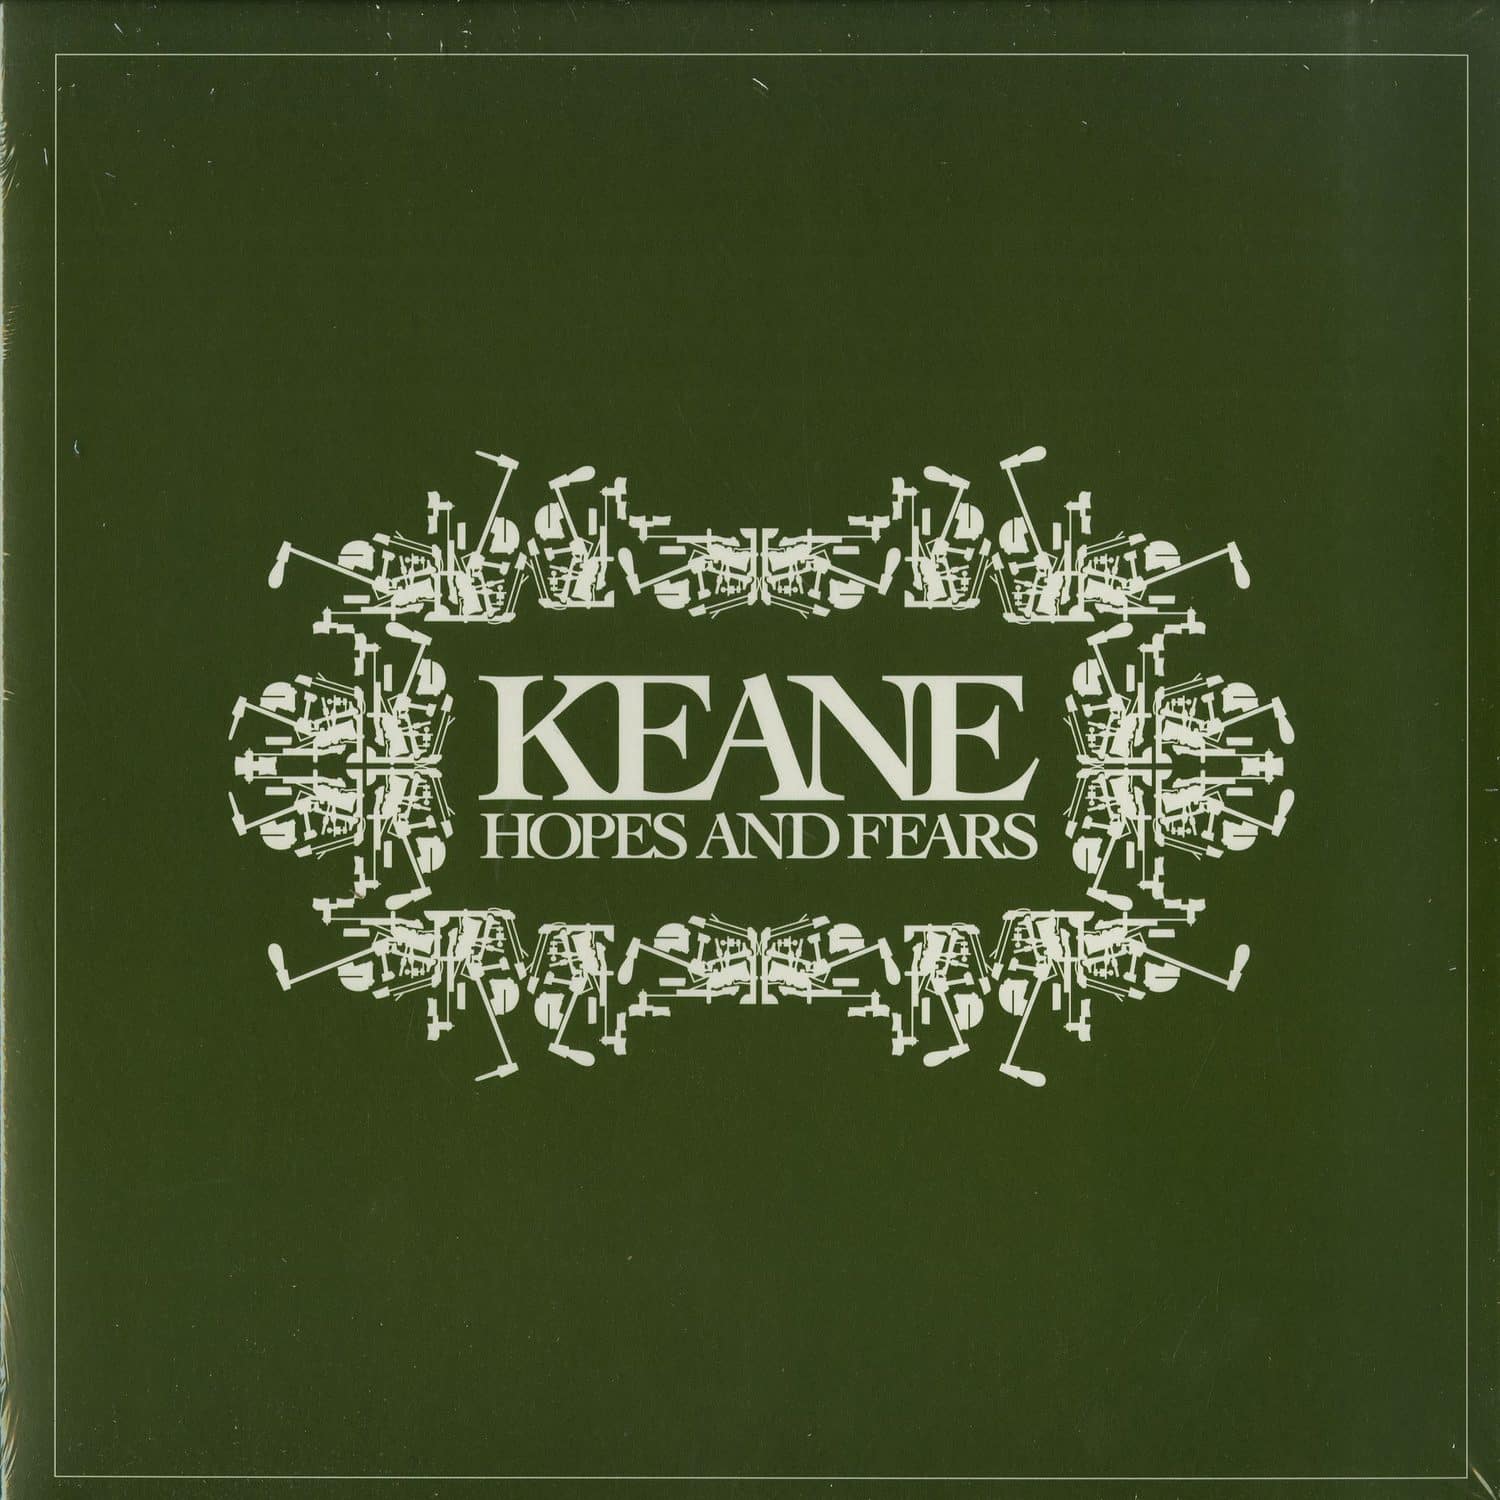 Keane - HOPES AND FEARS 